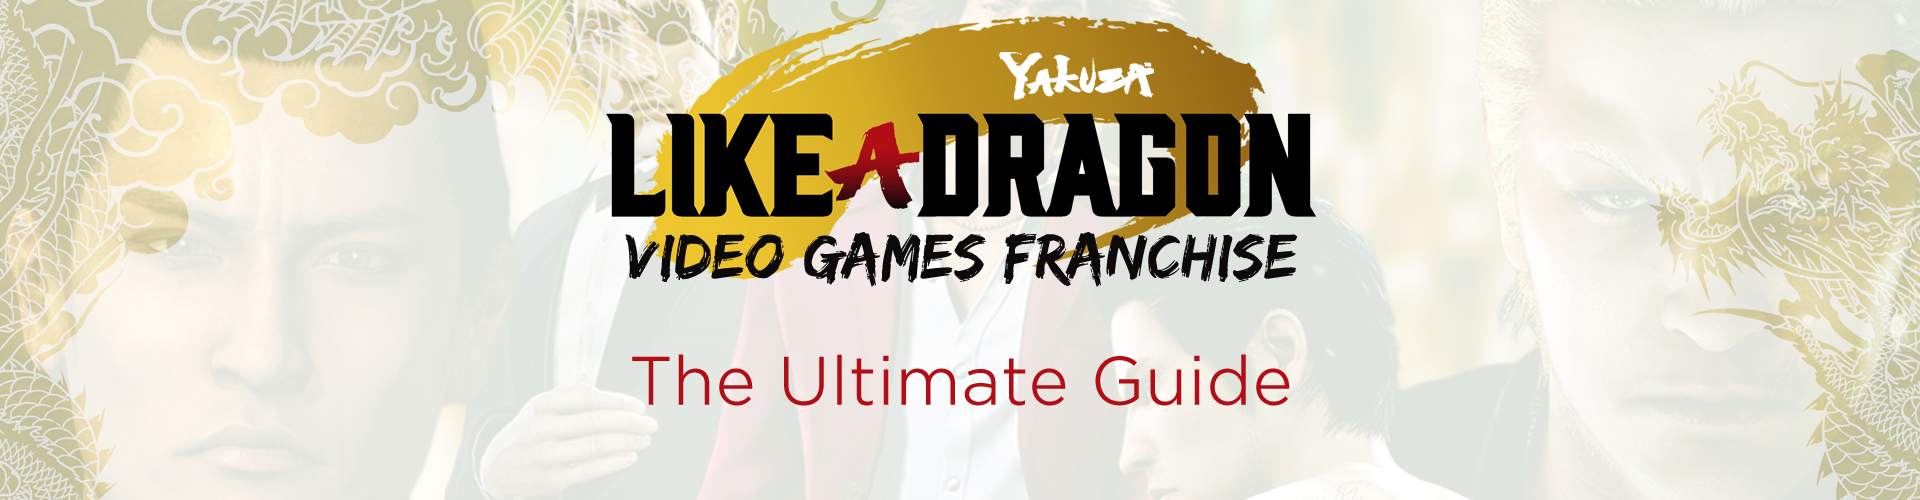 Exploring the history of the Yakuza and Like a Dragon series